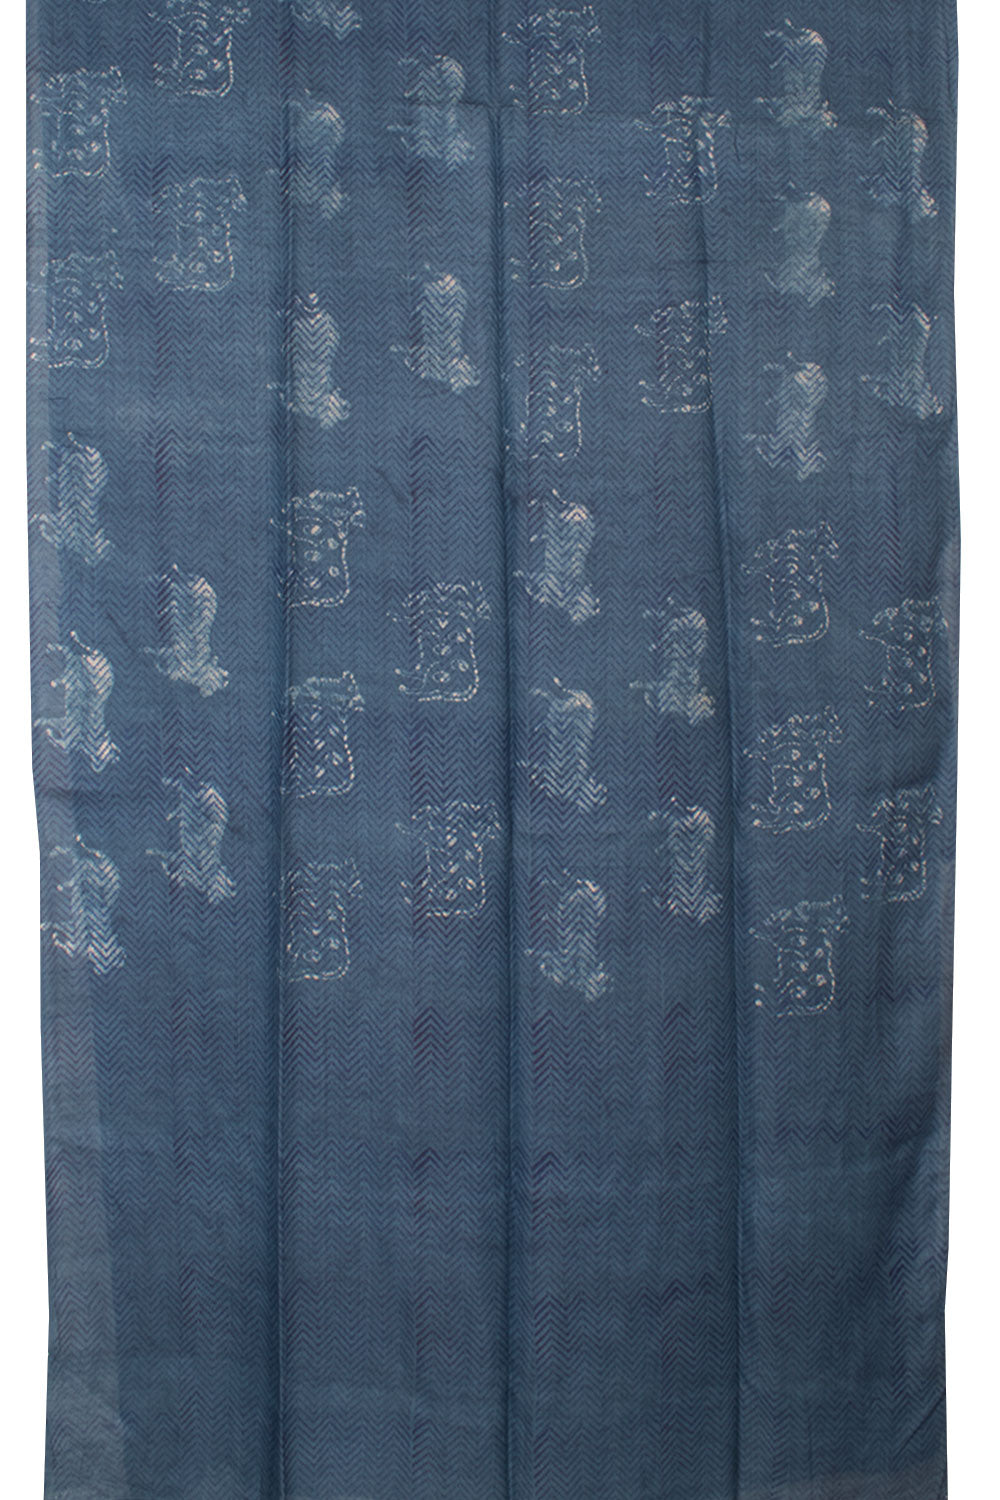 Indigo Hand Block Printed Tussur Silk Saree 10059558